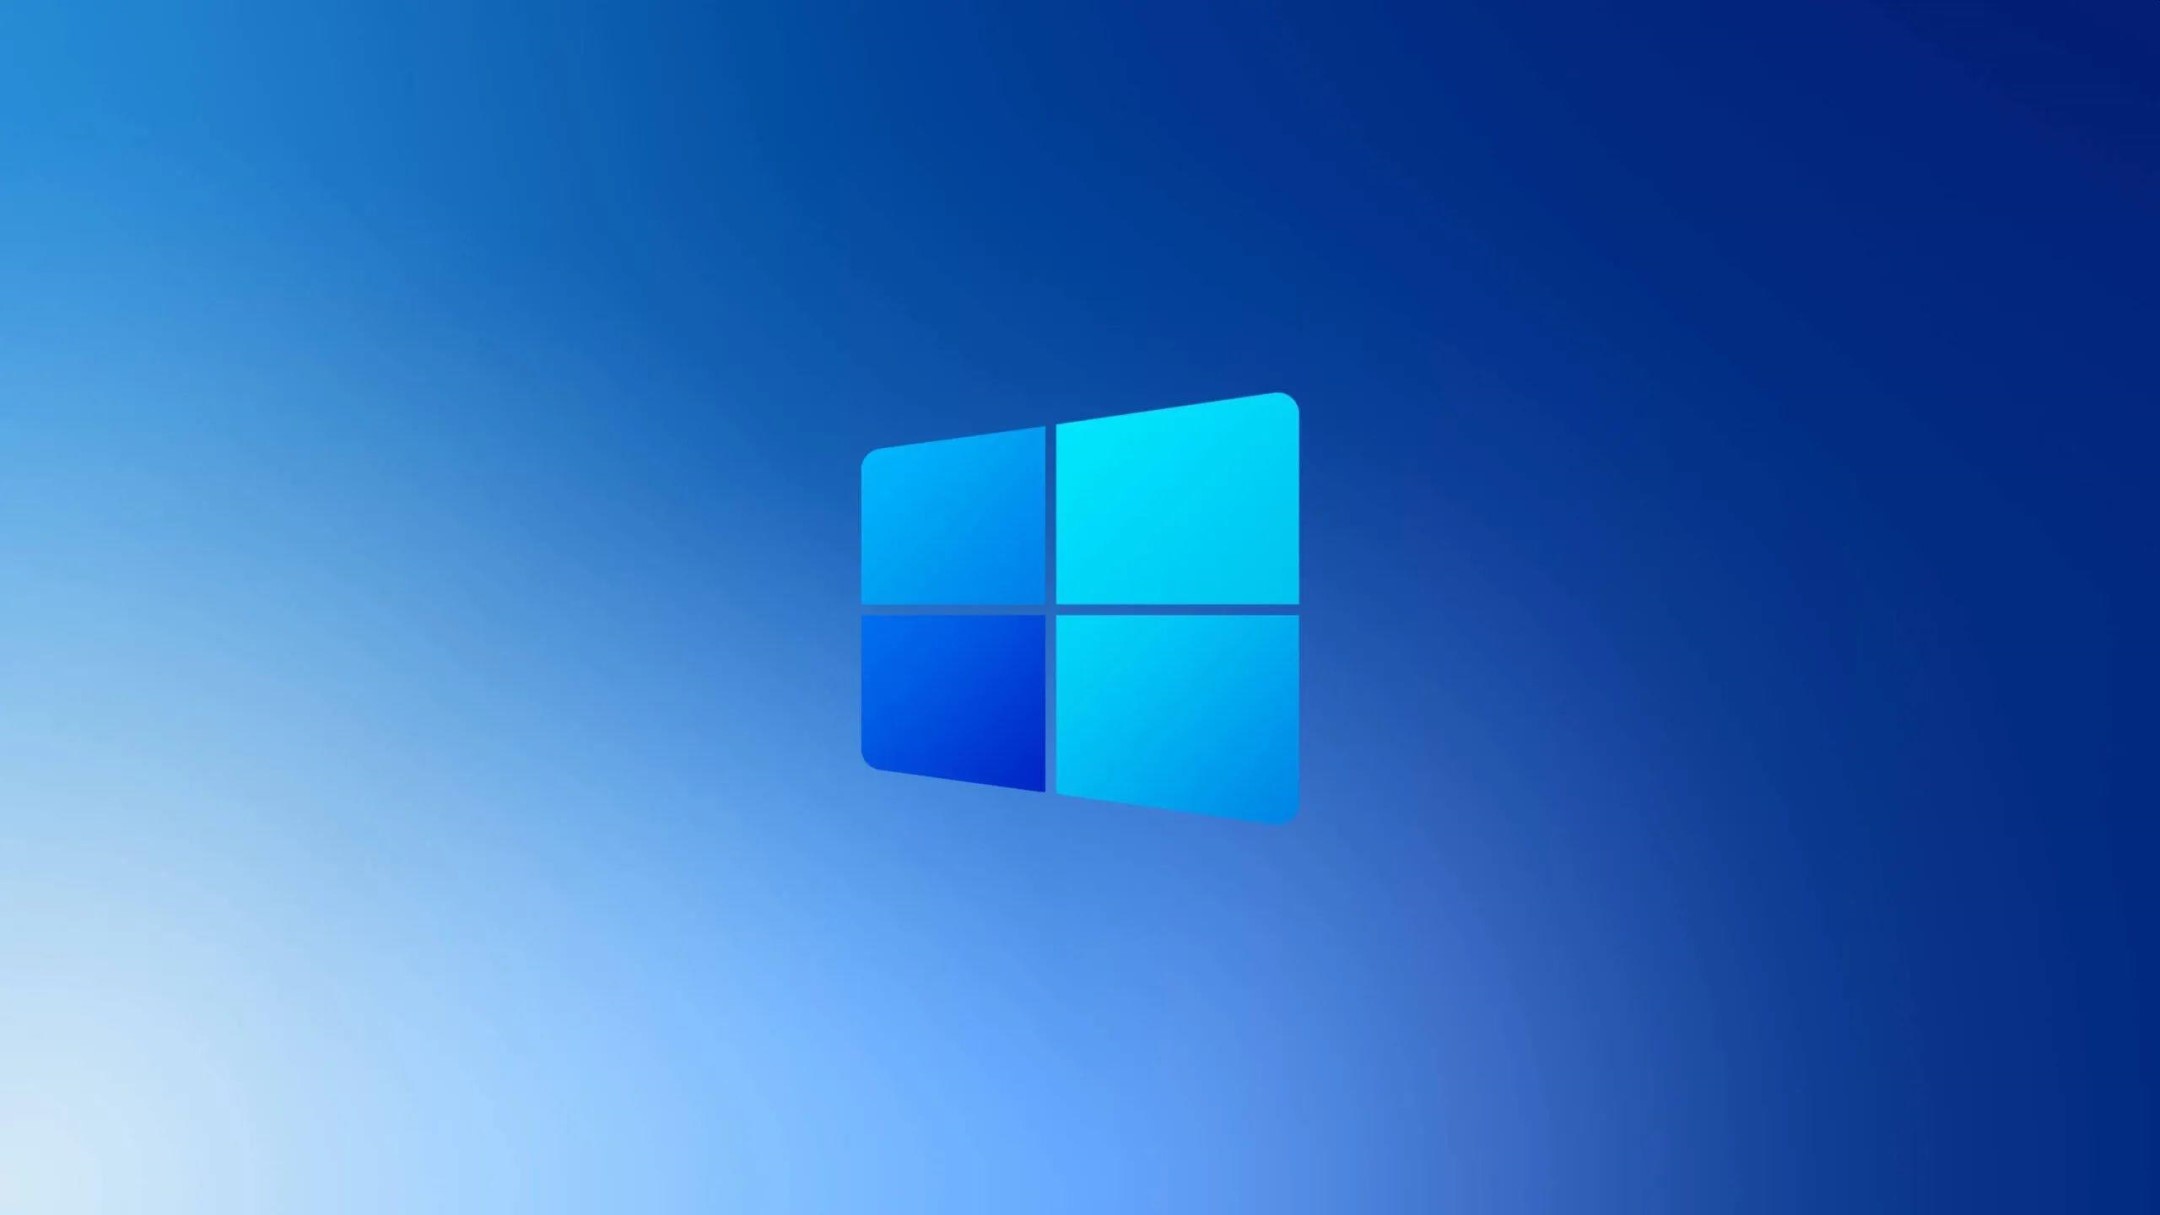 Windows 11 runs on just 176MB of RAM - the surprising test